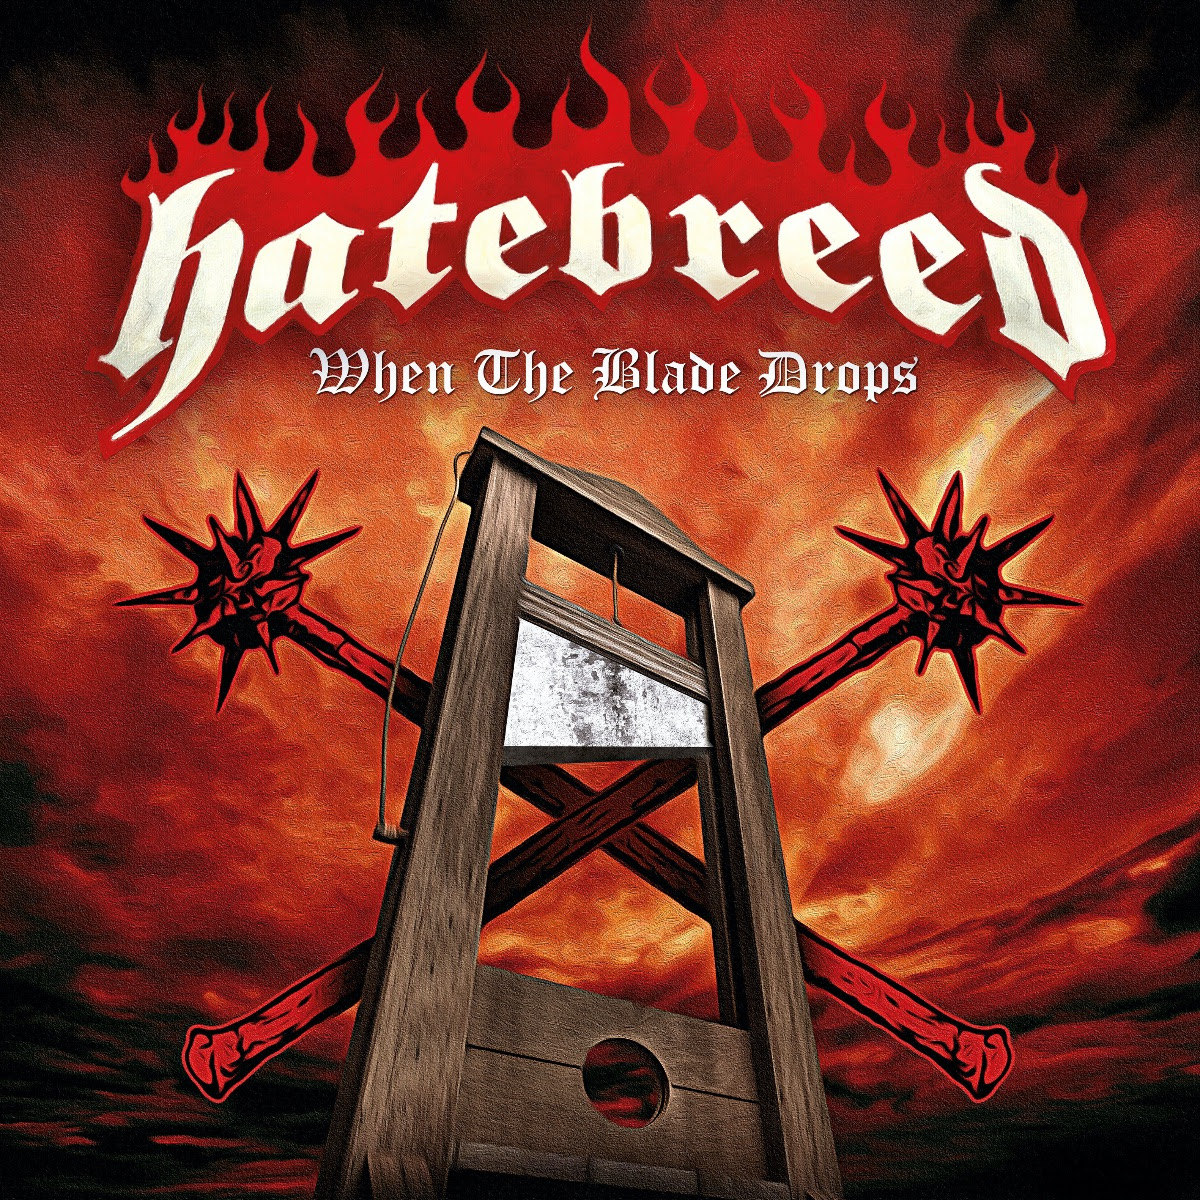 Hatebreed - When the Blade Drops single art